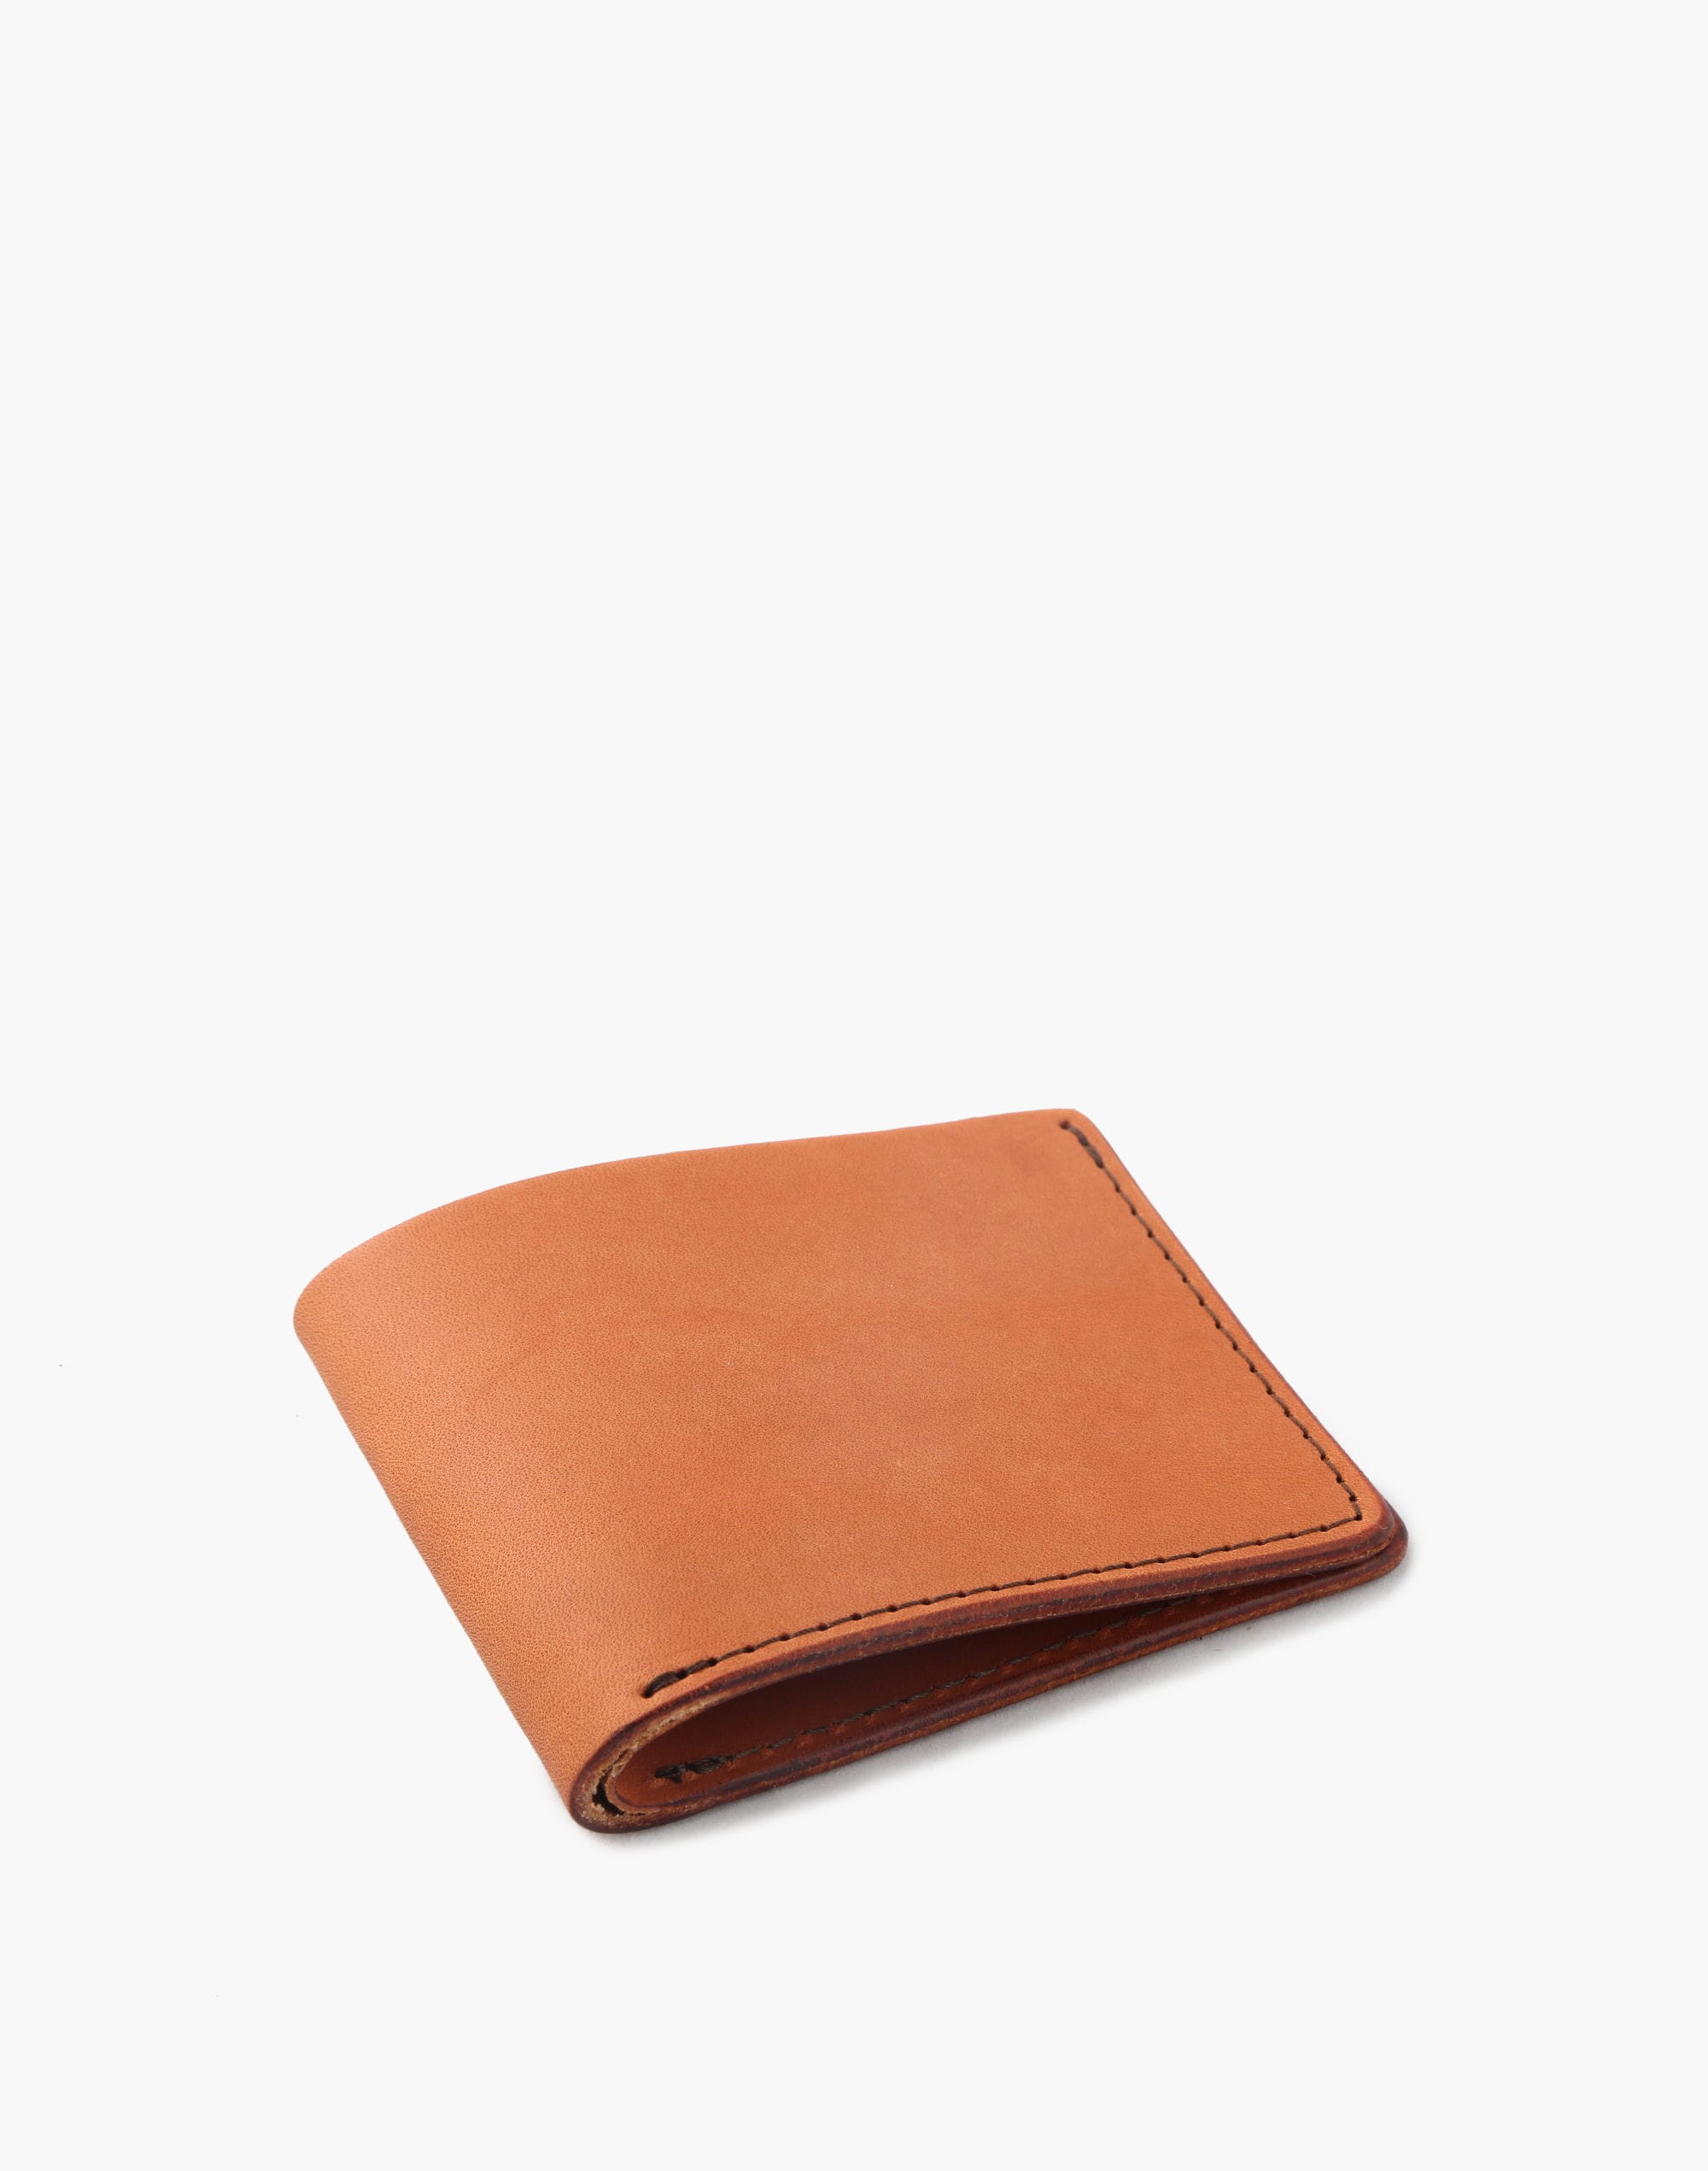 Tanner Goods™ Minimal Bifold Wallet